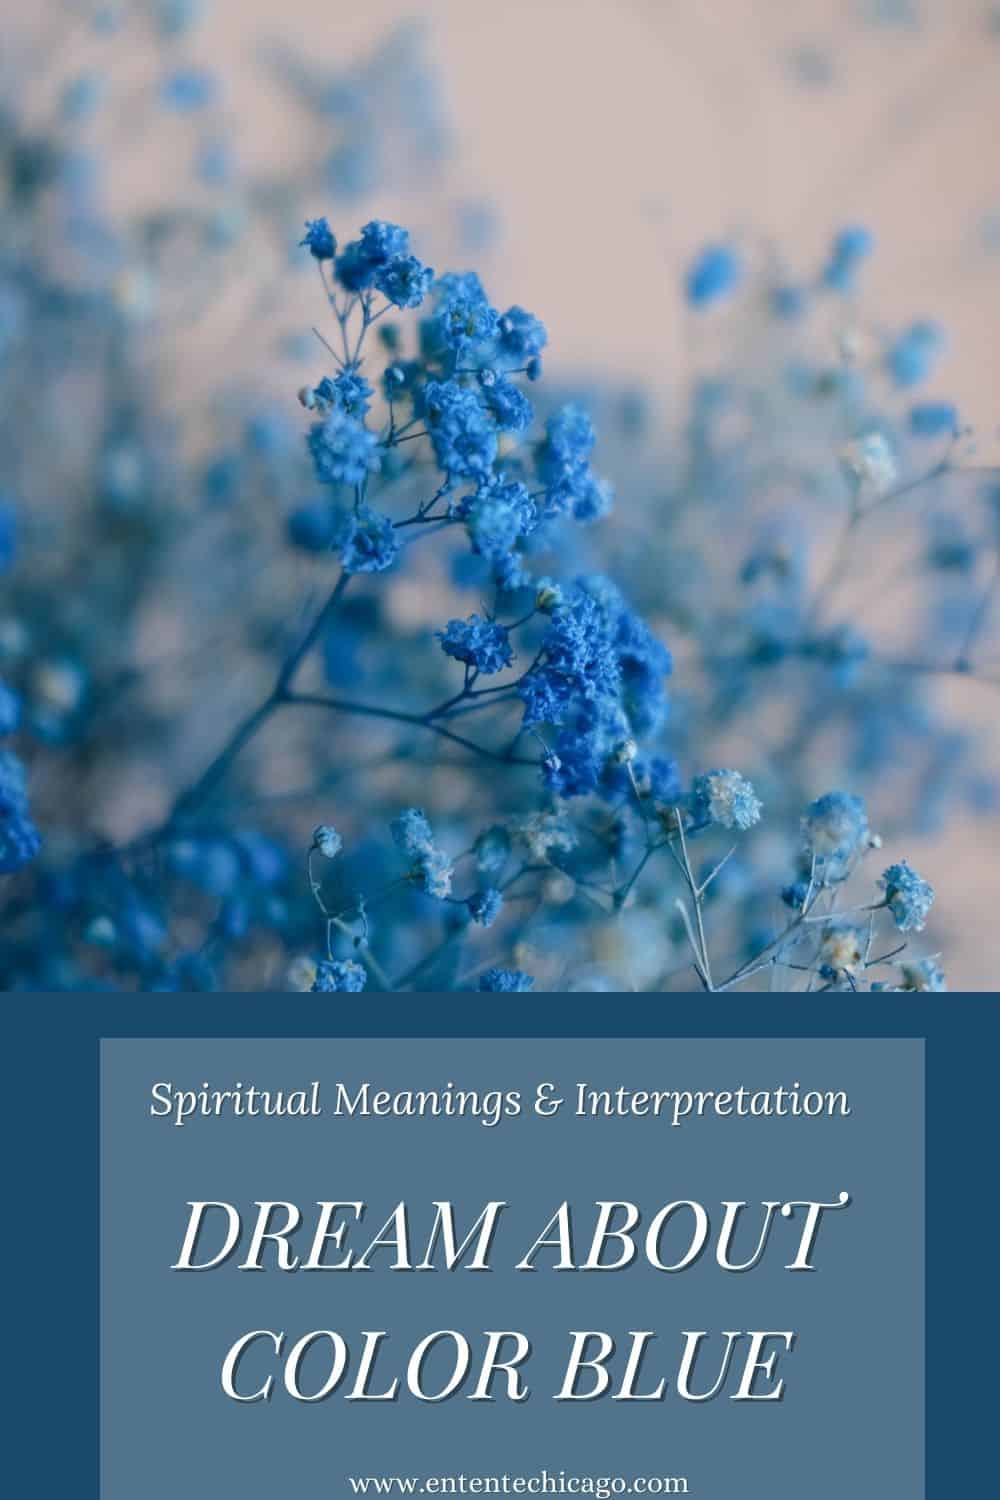 Dream About Color Blue (Spiritual Meanings & Interpretation)